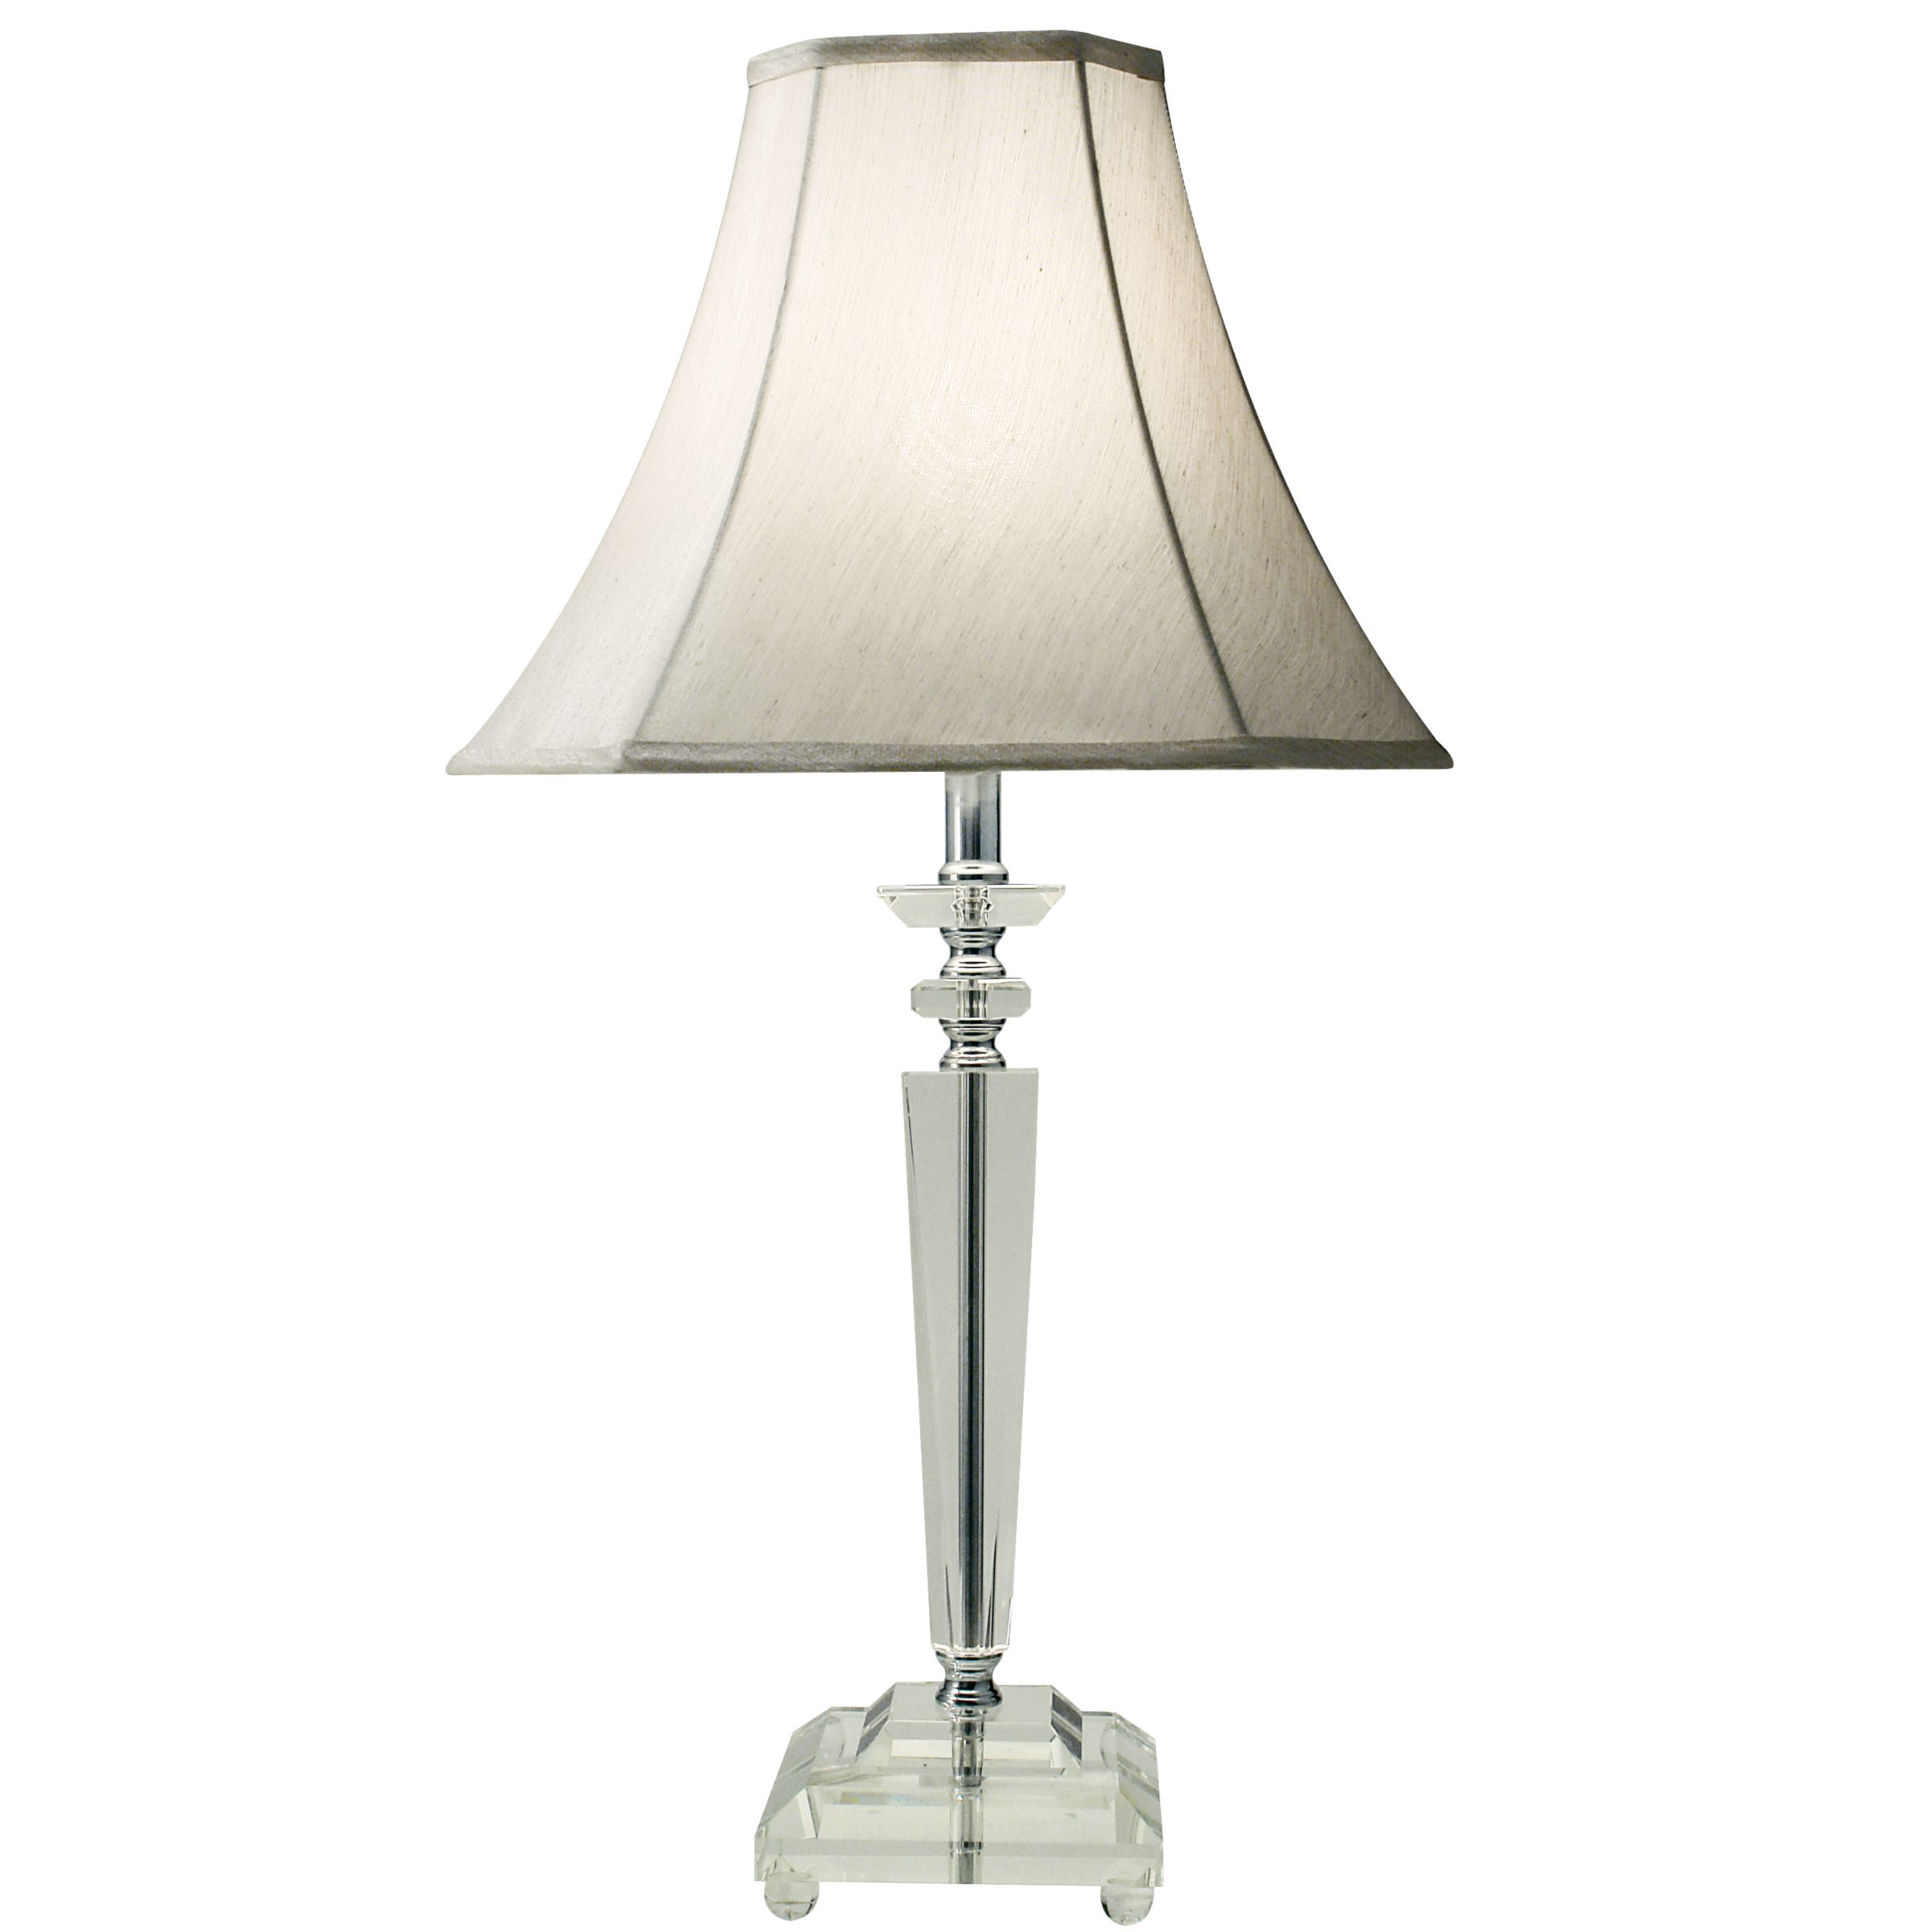 John Lewis Hattie Table Lamp